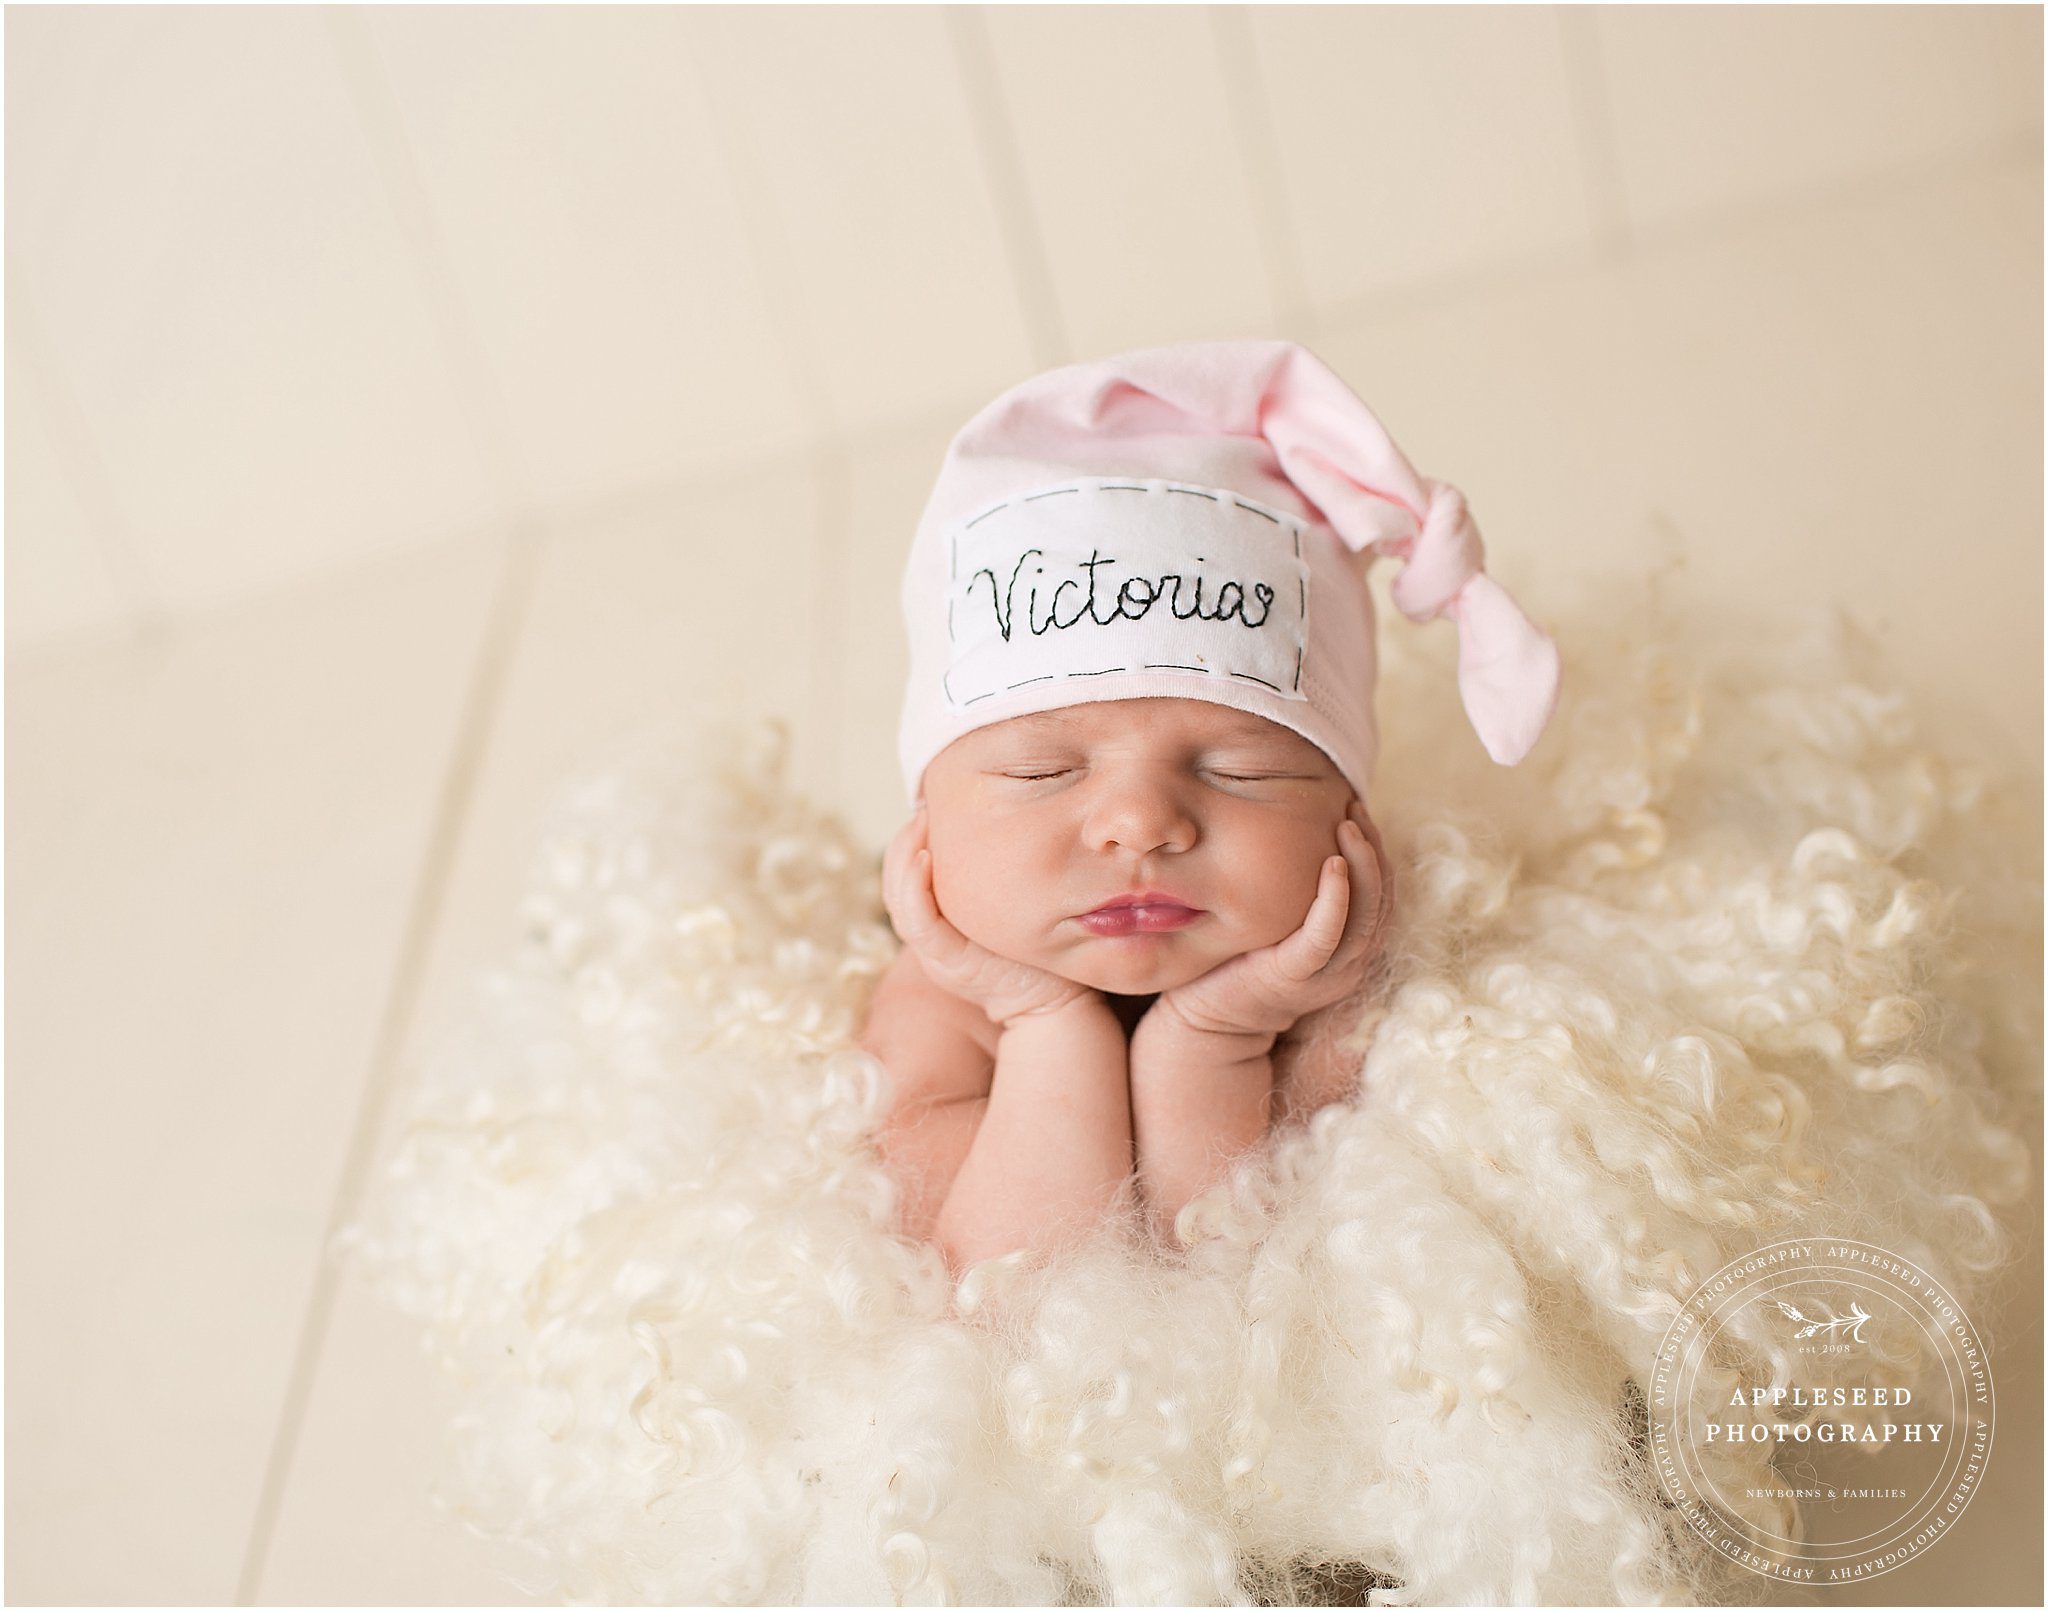 Victoria | Atlanta Newborn Photography | Appleseed Photography